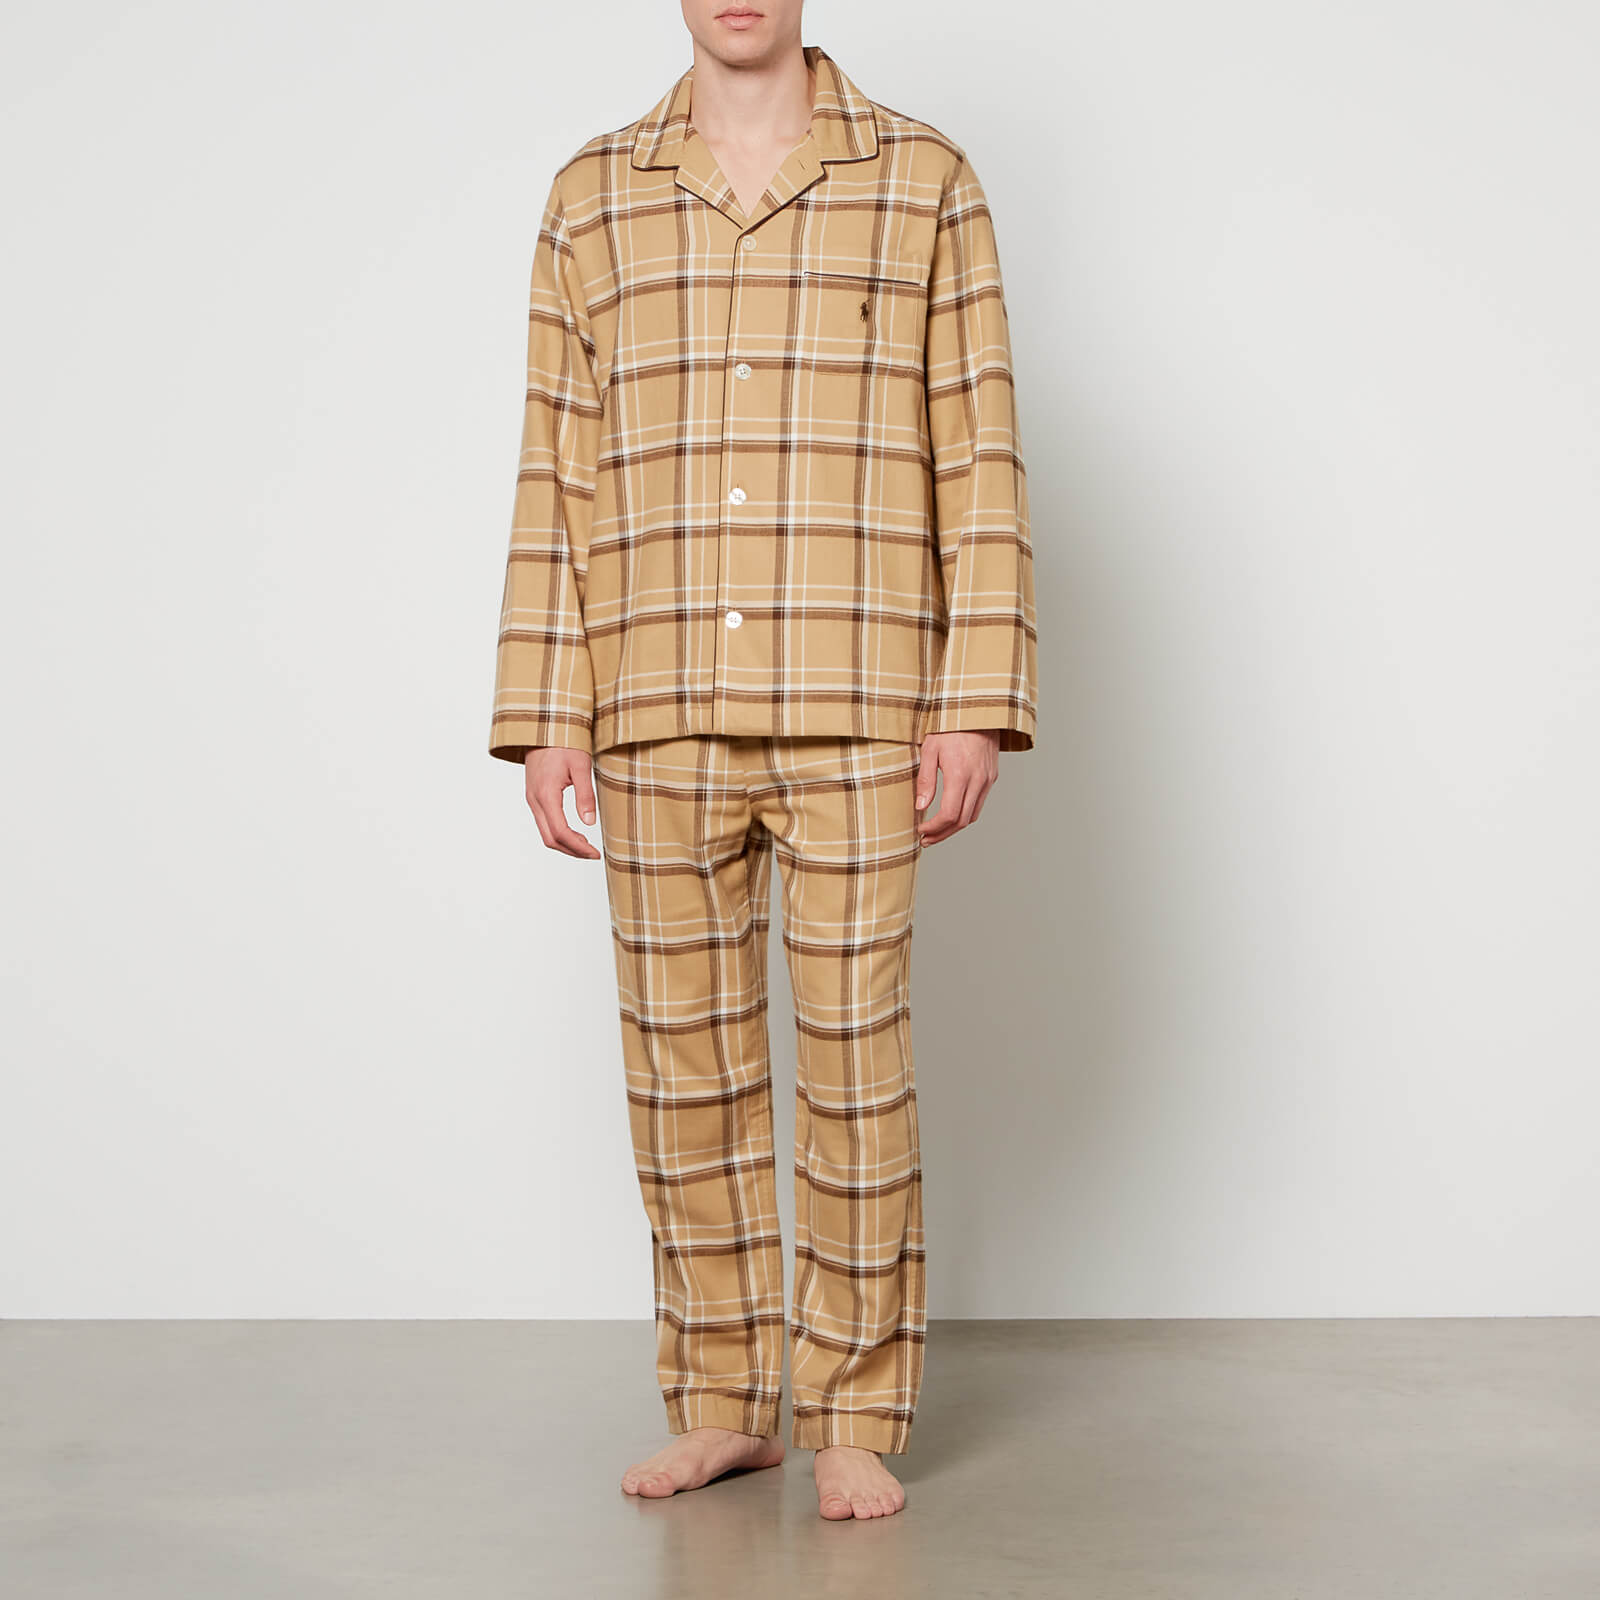 Polo Ralph Lauren Men's Long Sleeve Pajama Set - Khaki Brown Multi Plaid - S